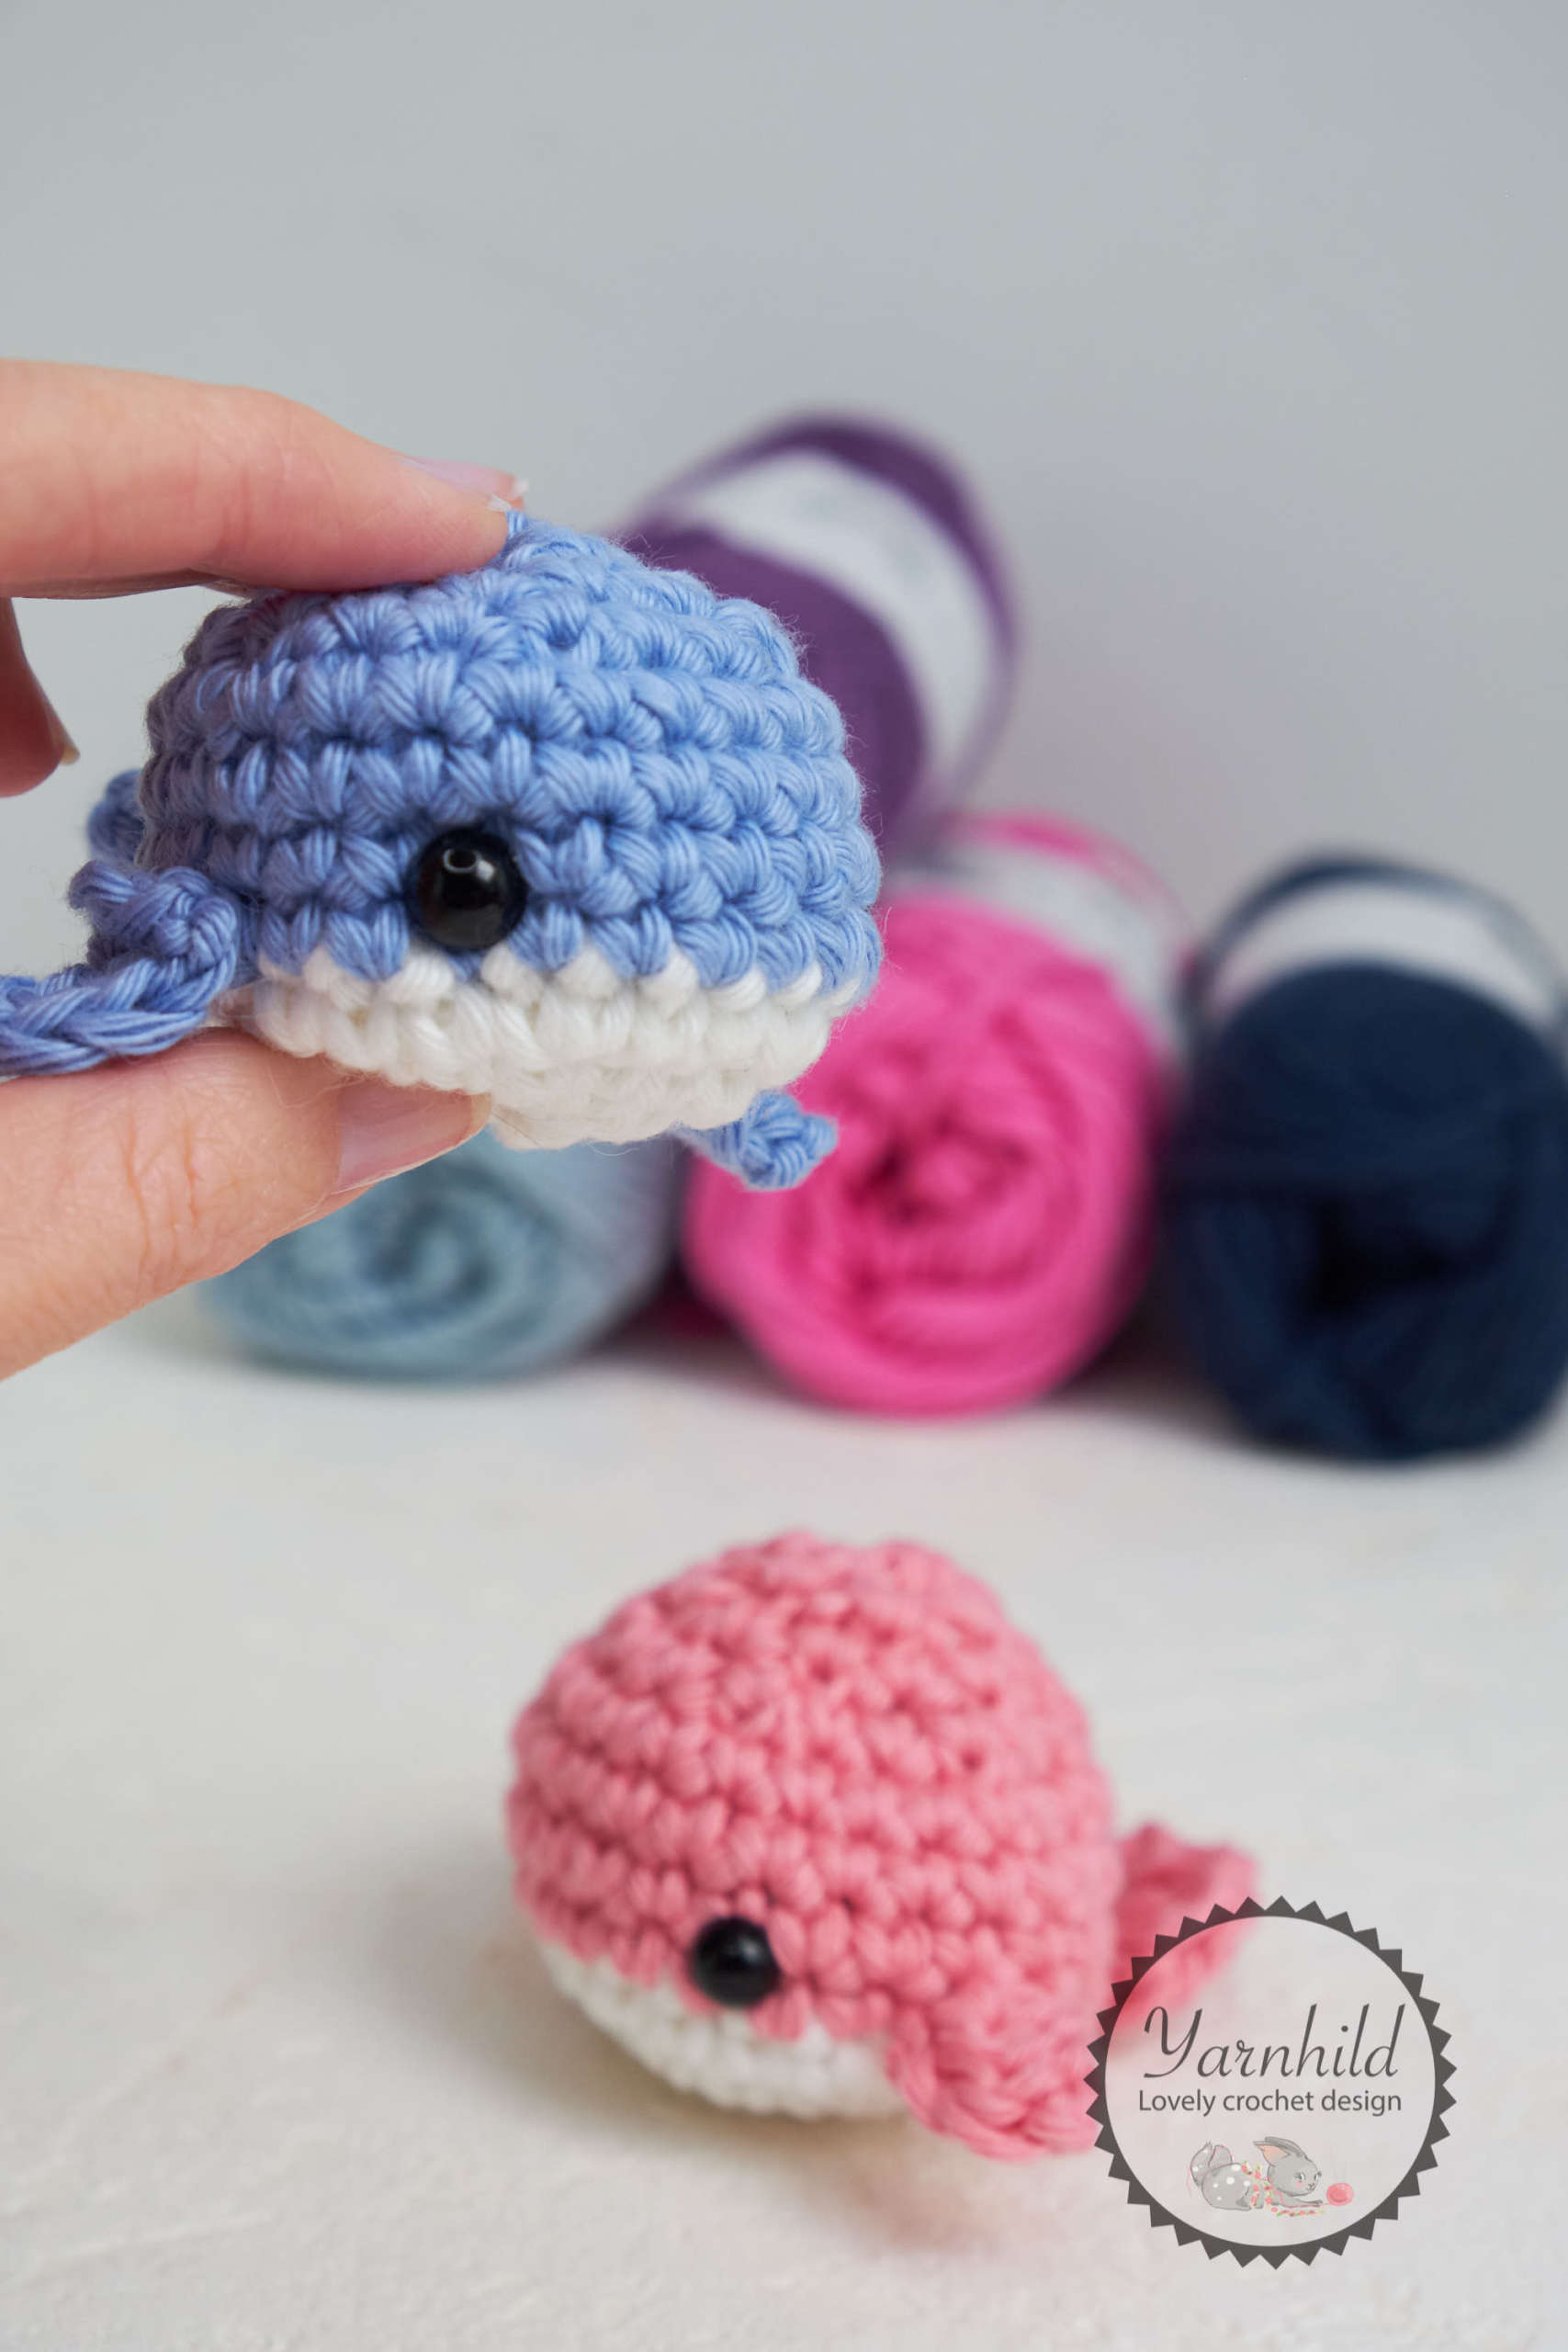 How to crochet an amigurumi whale - A free crochet pattern